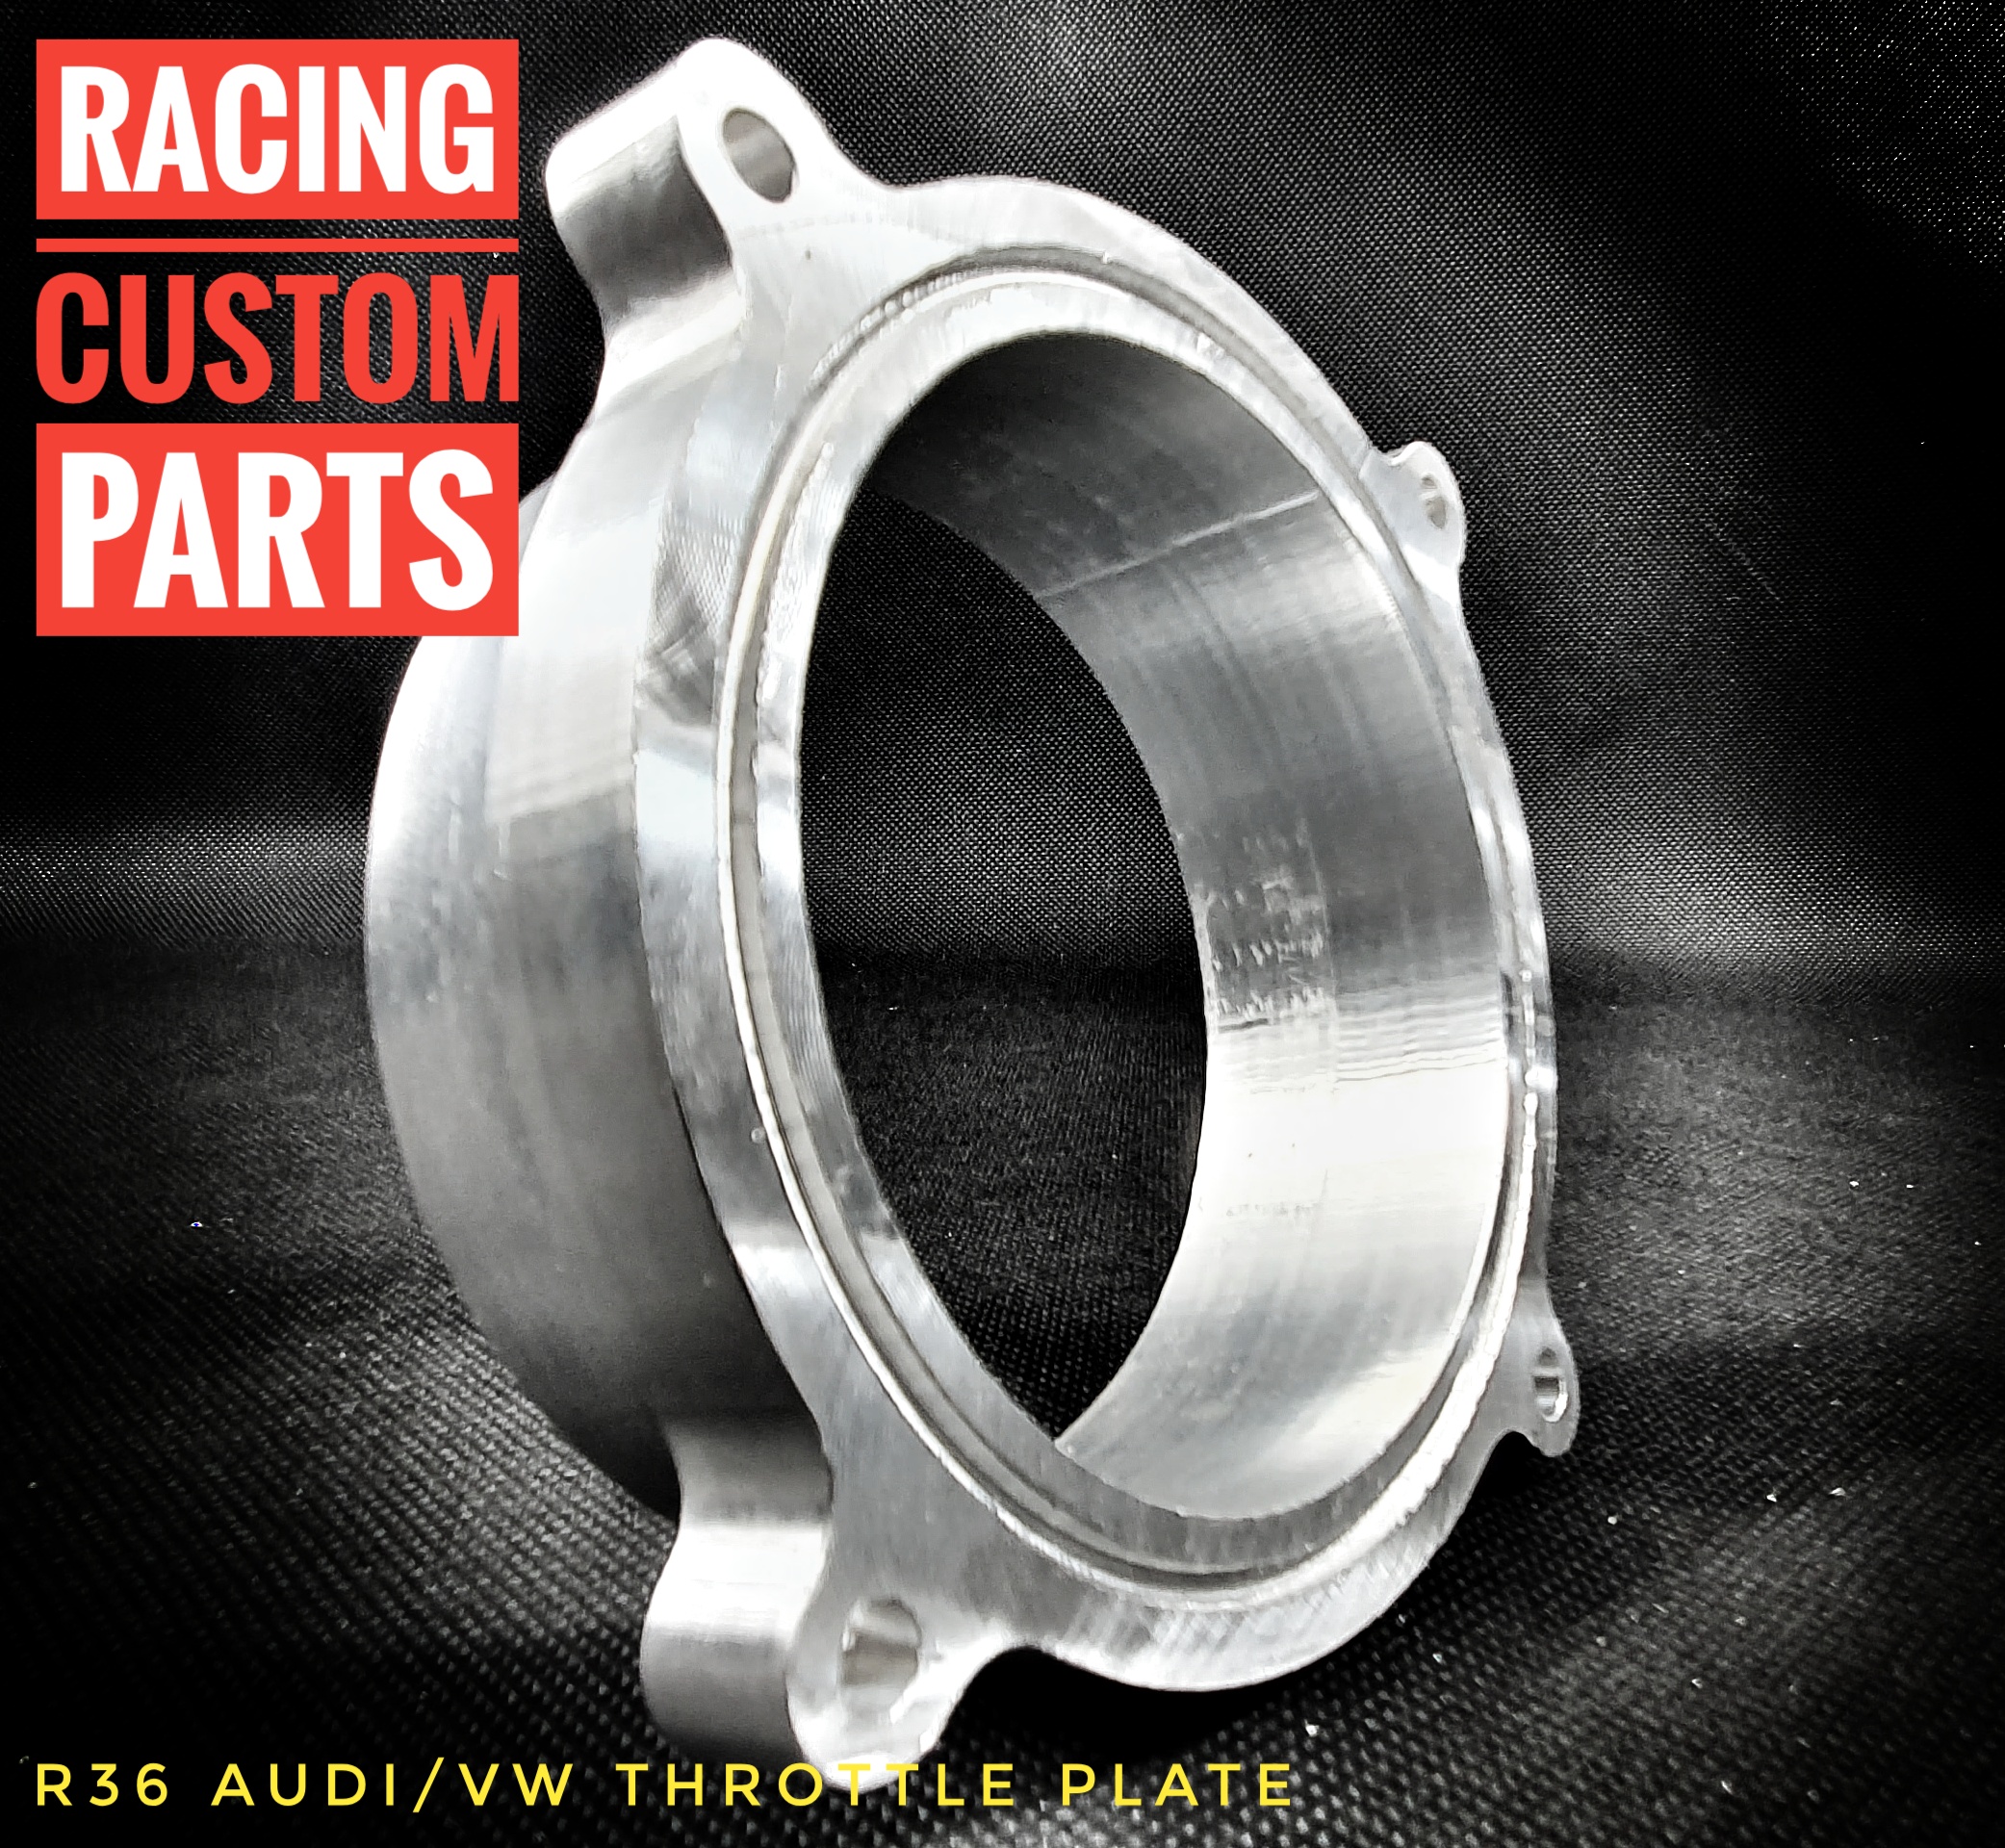 R36 audi vw passat 3.6 v6 custom billet cnc intake inlet manifold plate mpi adapter racing custom parts